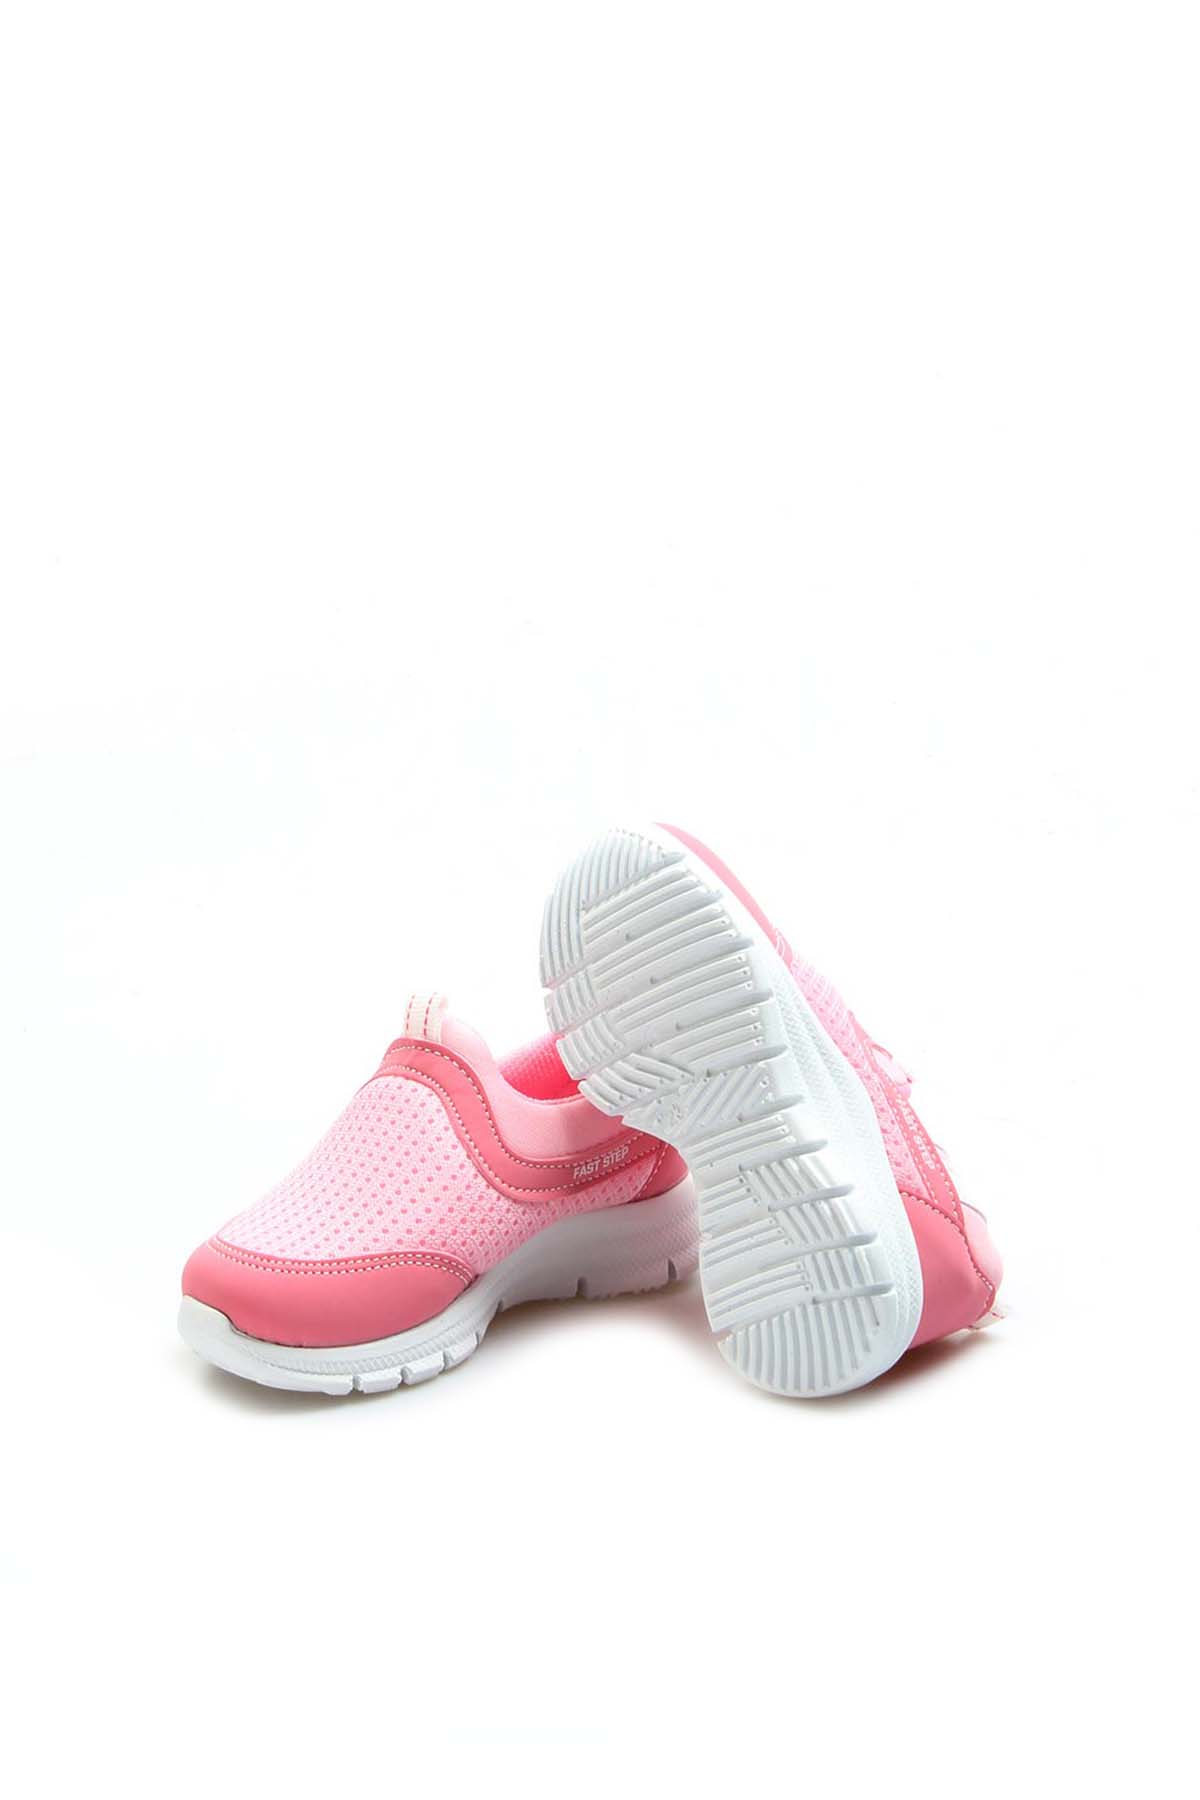 Fast Step Kids Unisex Boys Sport Shoes Pink 868BA1006